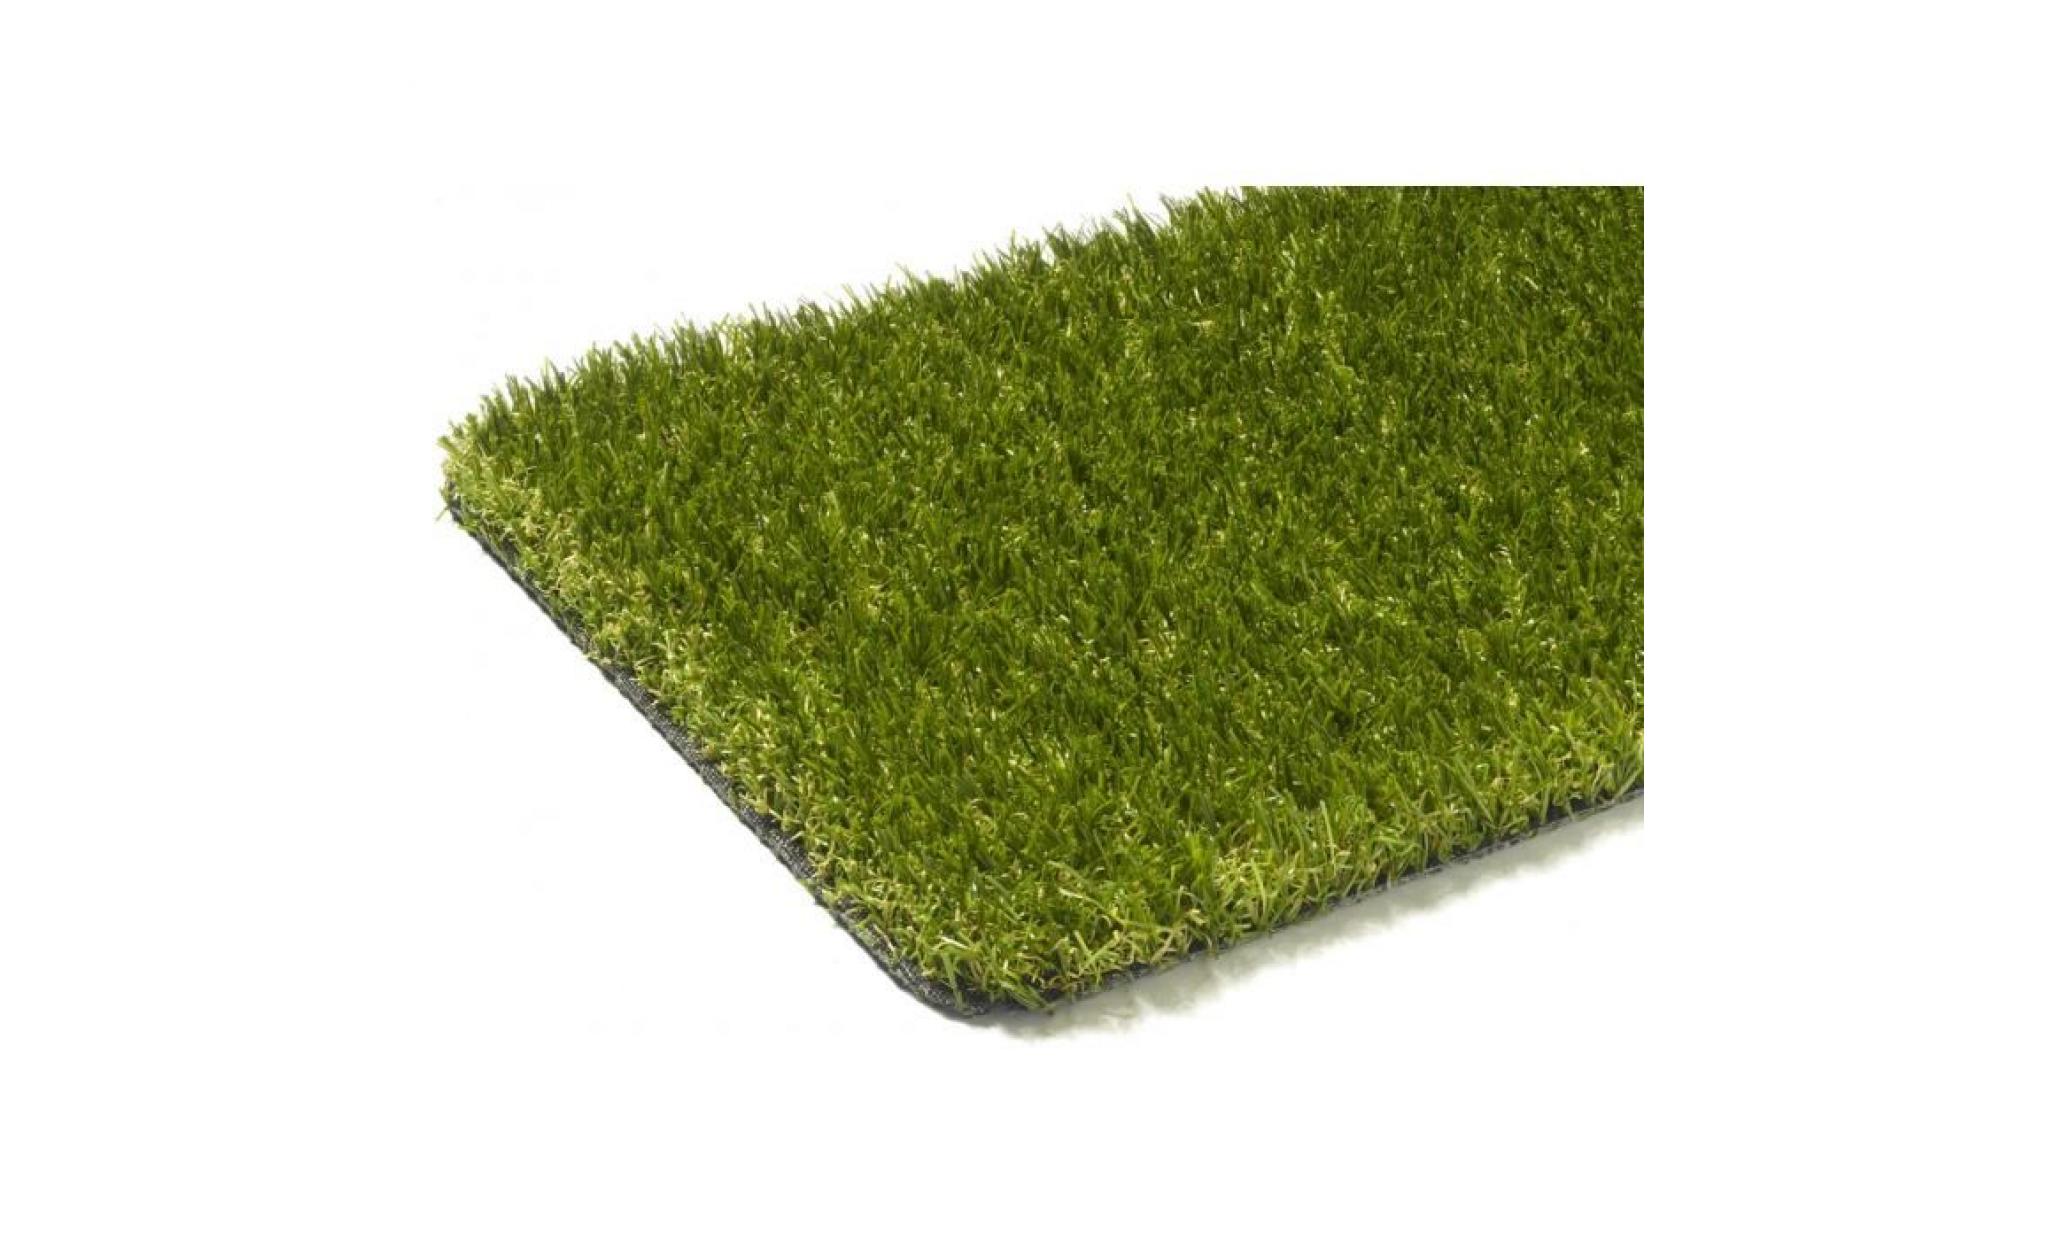 chelsea   tapis type luxe gazon artificiel – pour jardin, terrasse, balcon   vert  [400x100 cm]